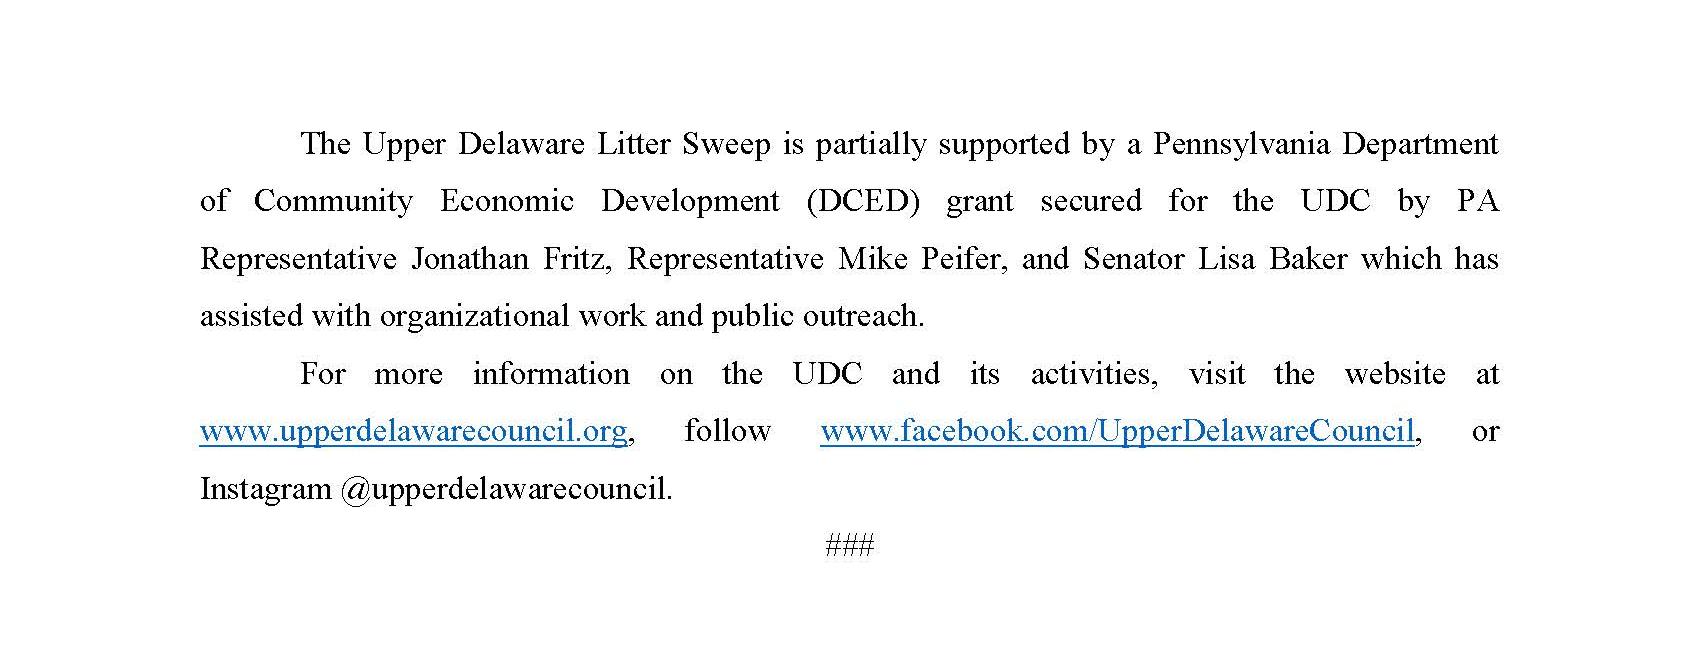 Litter Sweep Volunteers Needed pr_Page_2 - Copy (3)